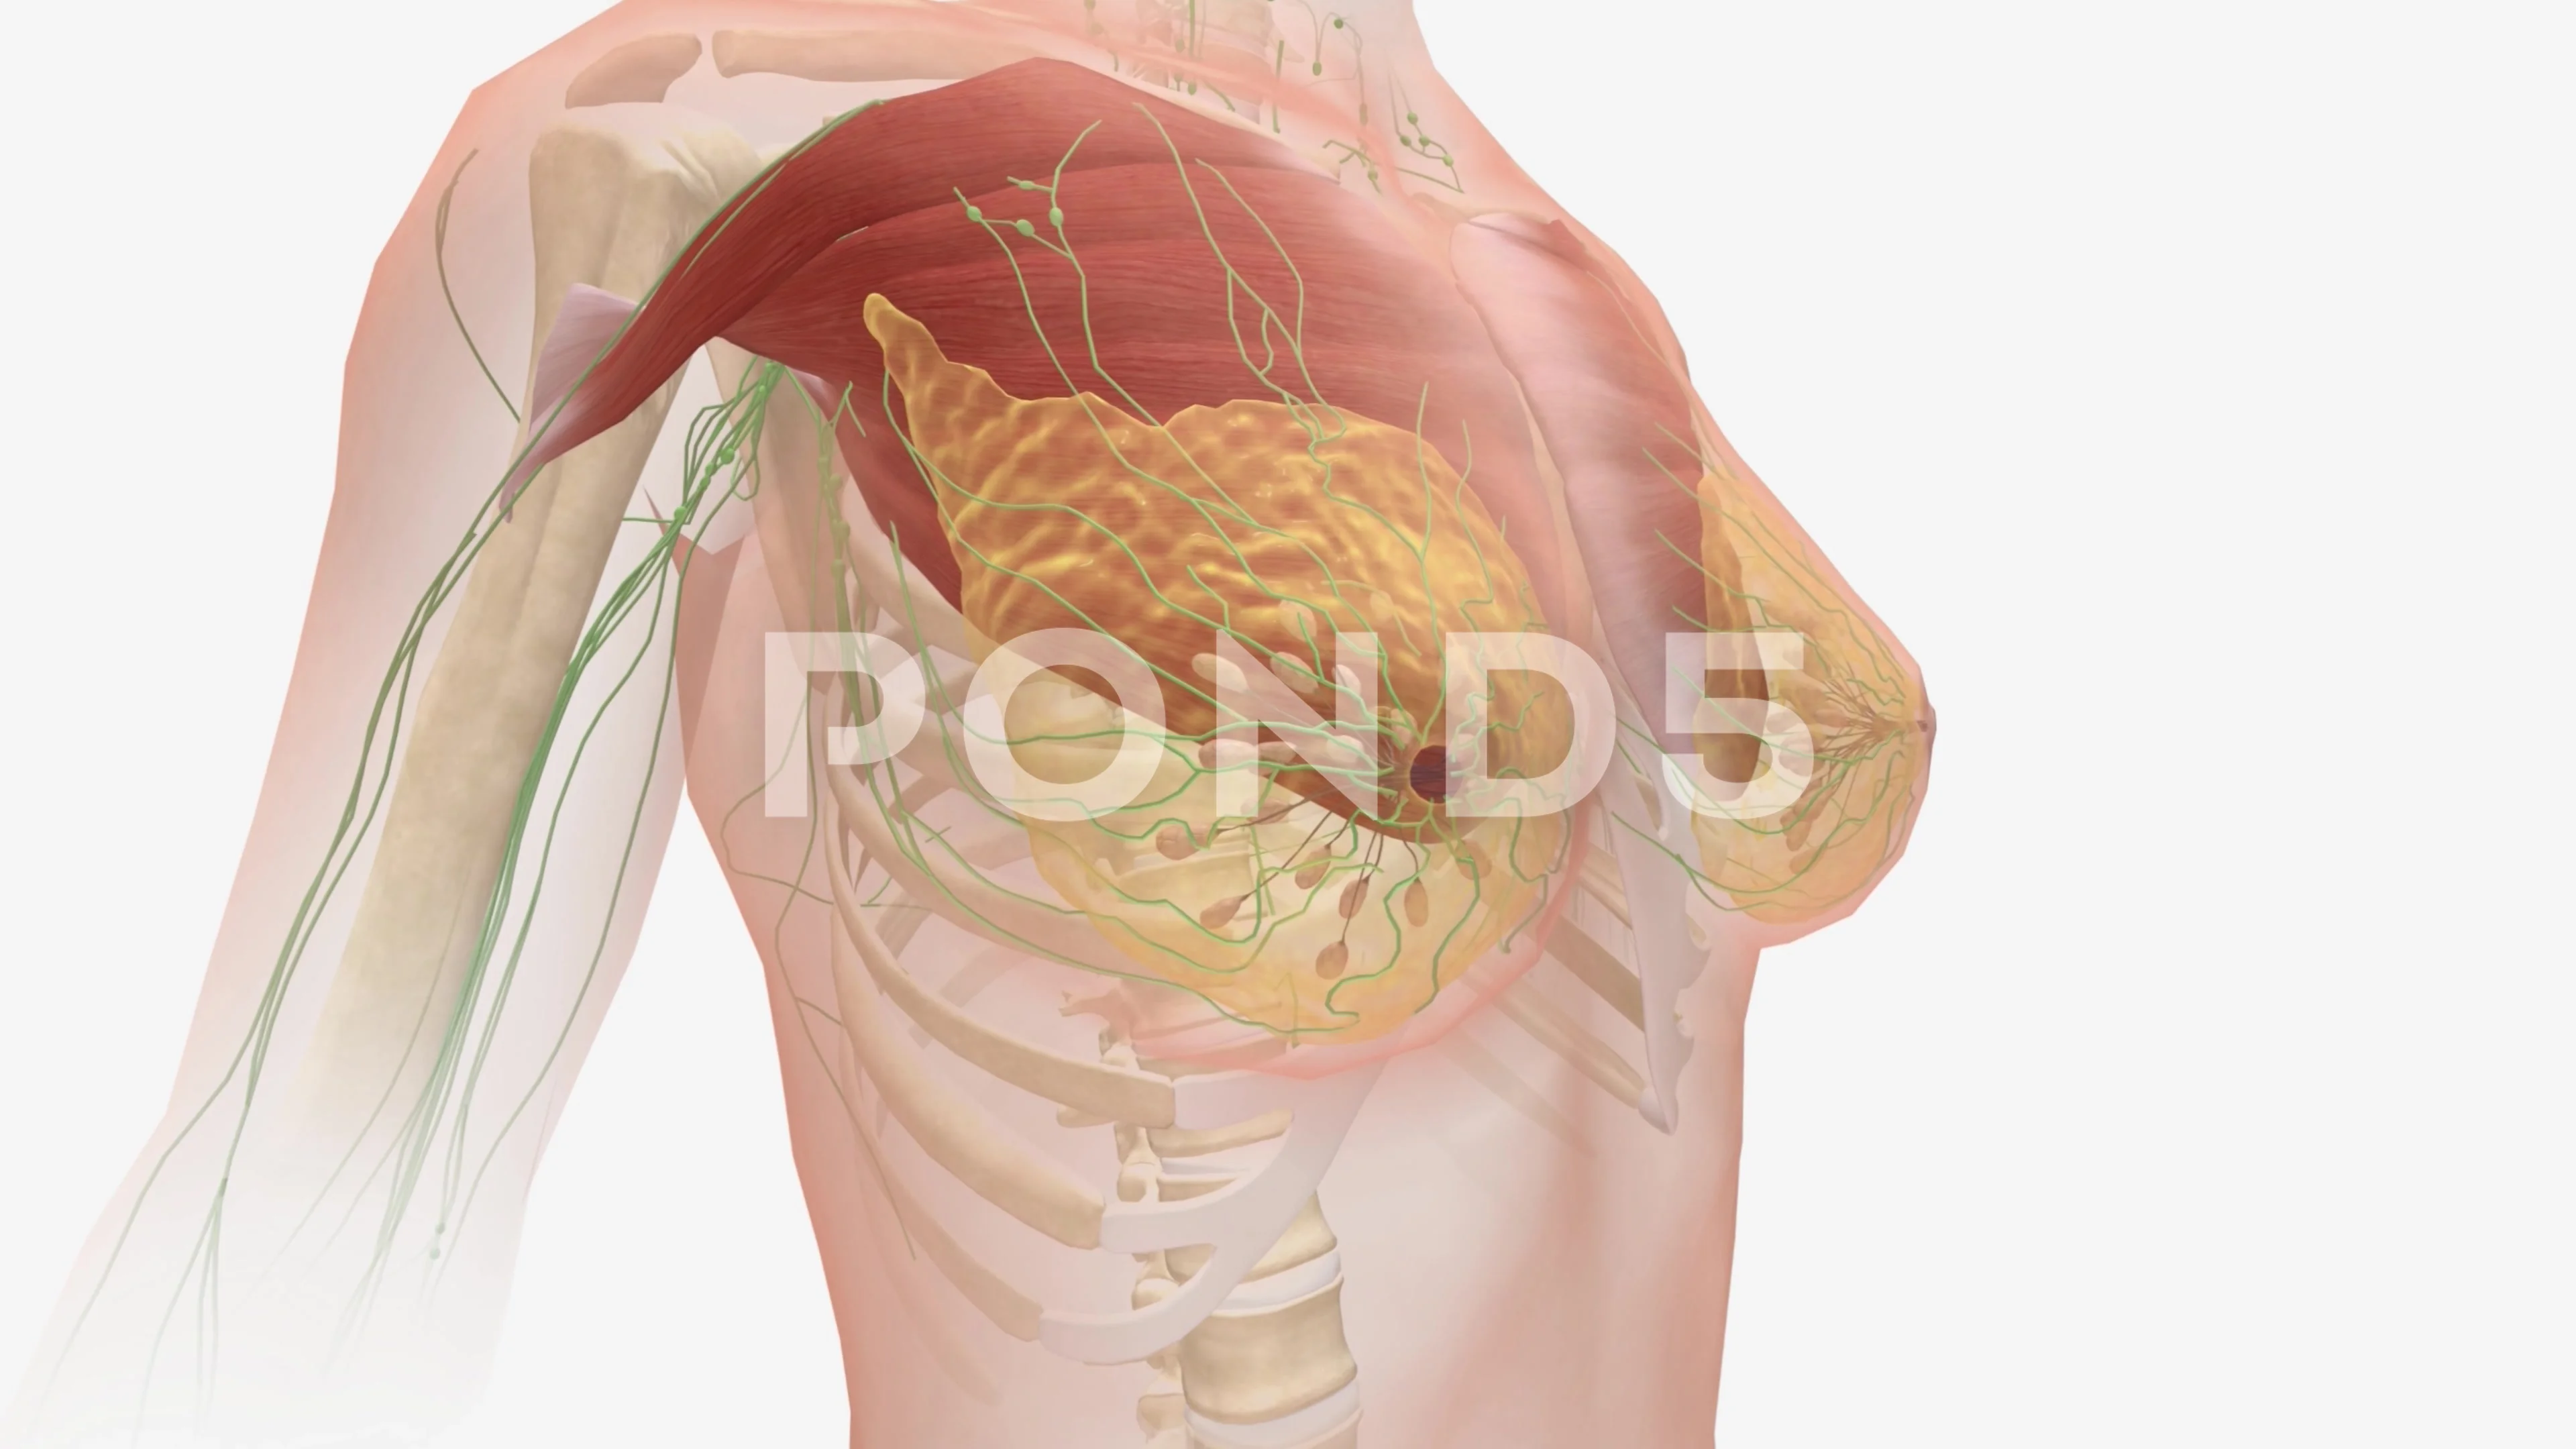 https://images.pond5.com/female-breast-anatomy-includes-internal-footage-244669382_prevstill.jpeg